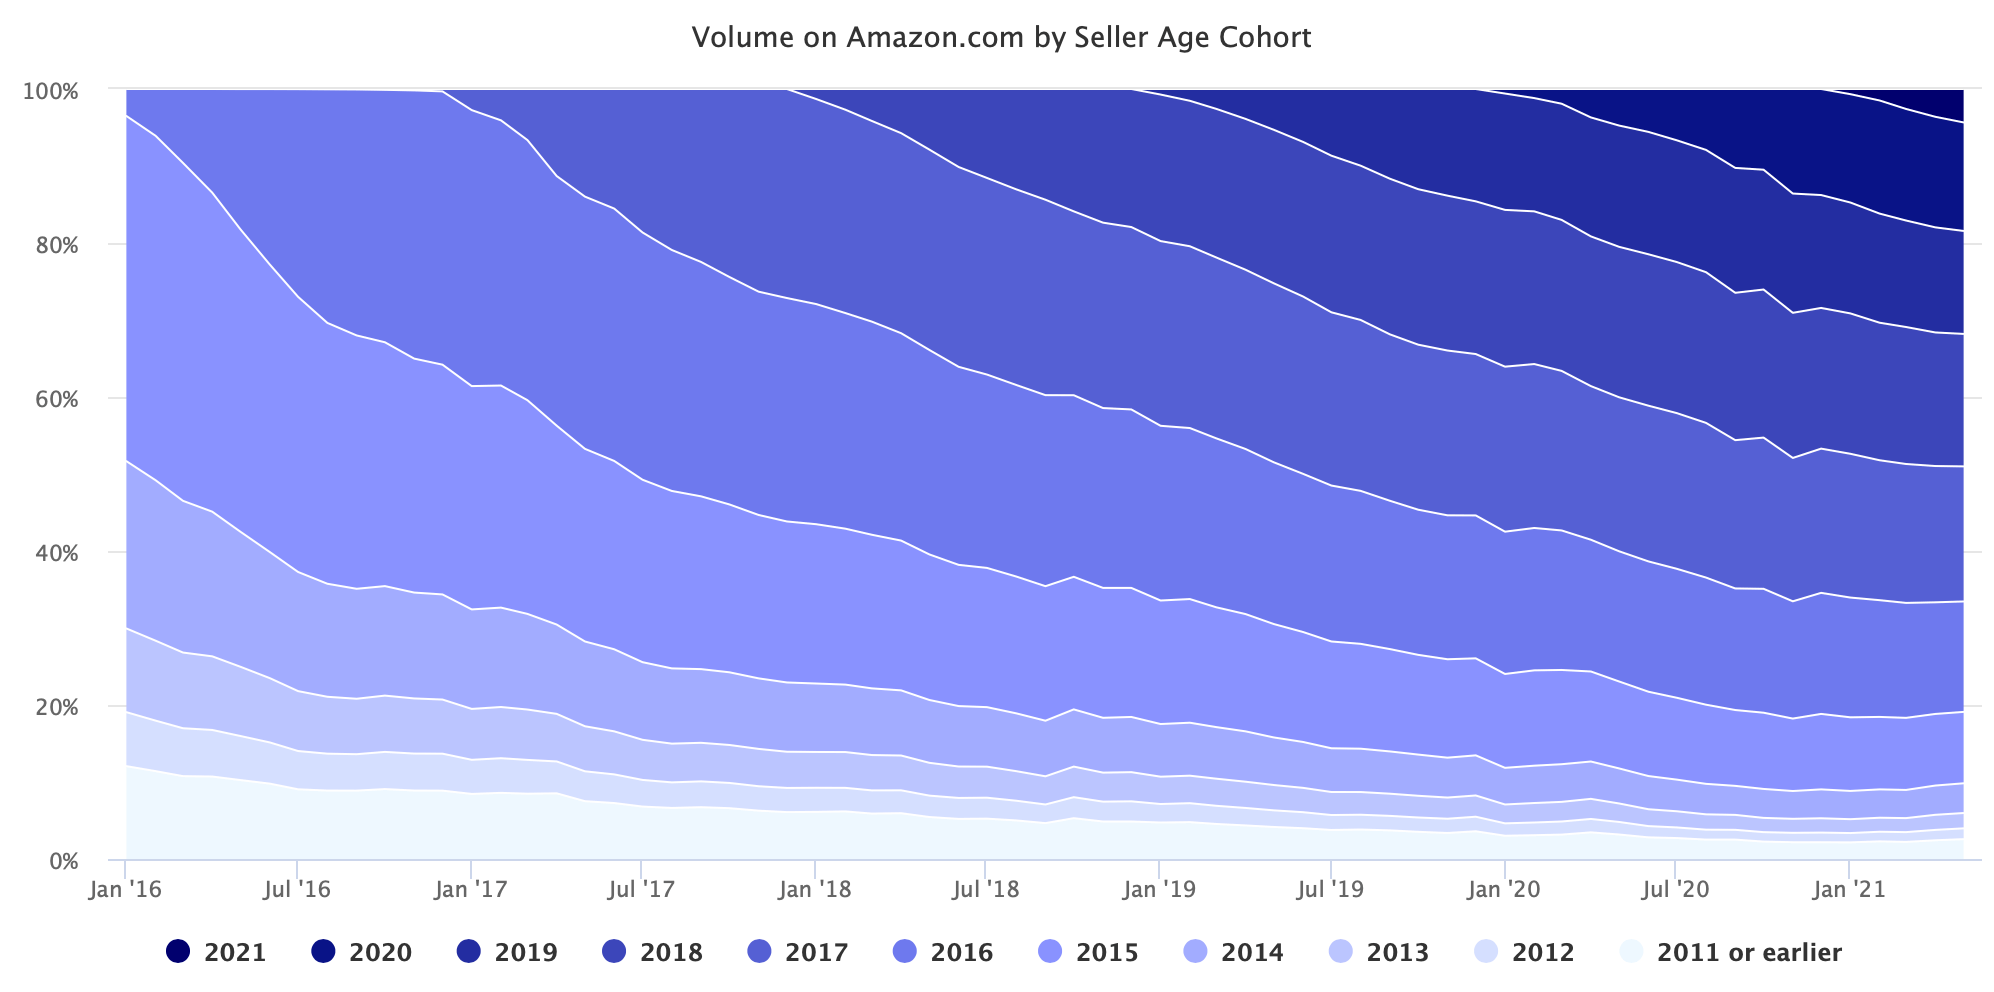 Amazon.com 上按卖家年龄组划分的销量